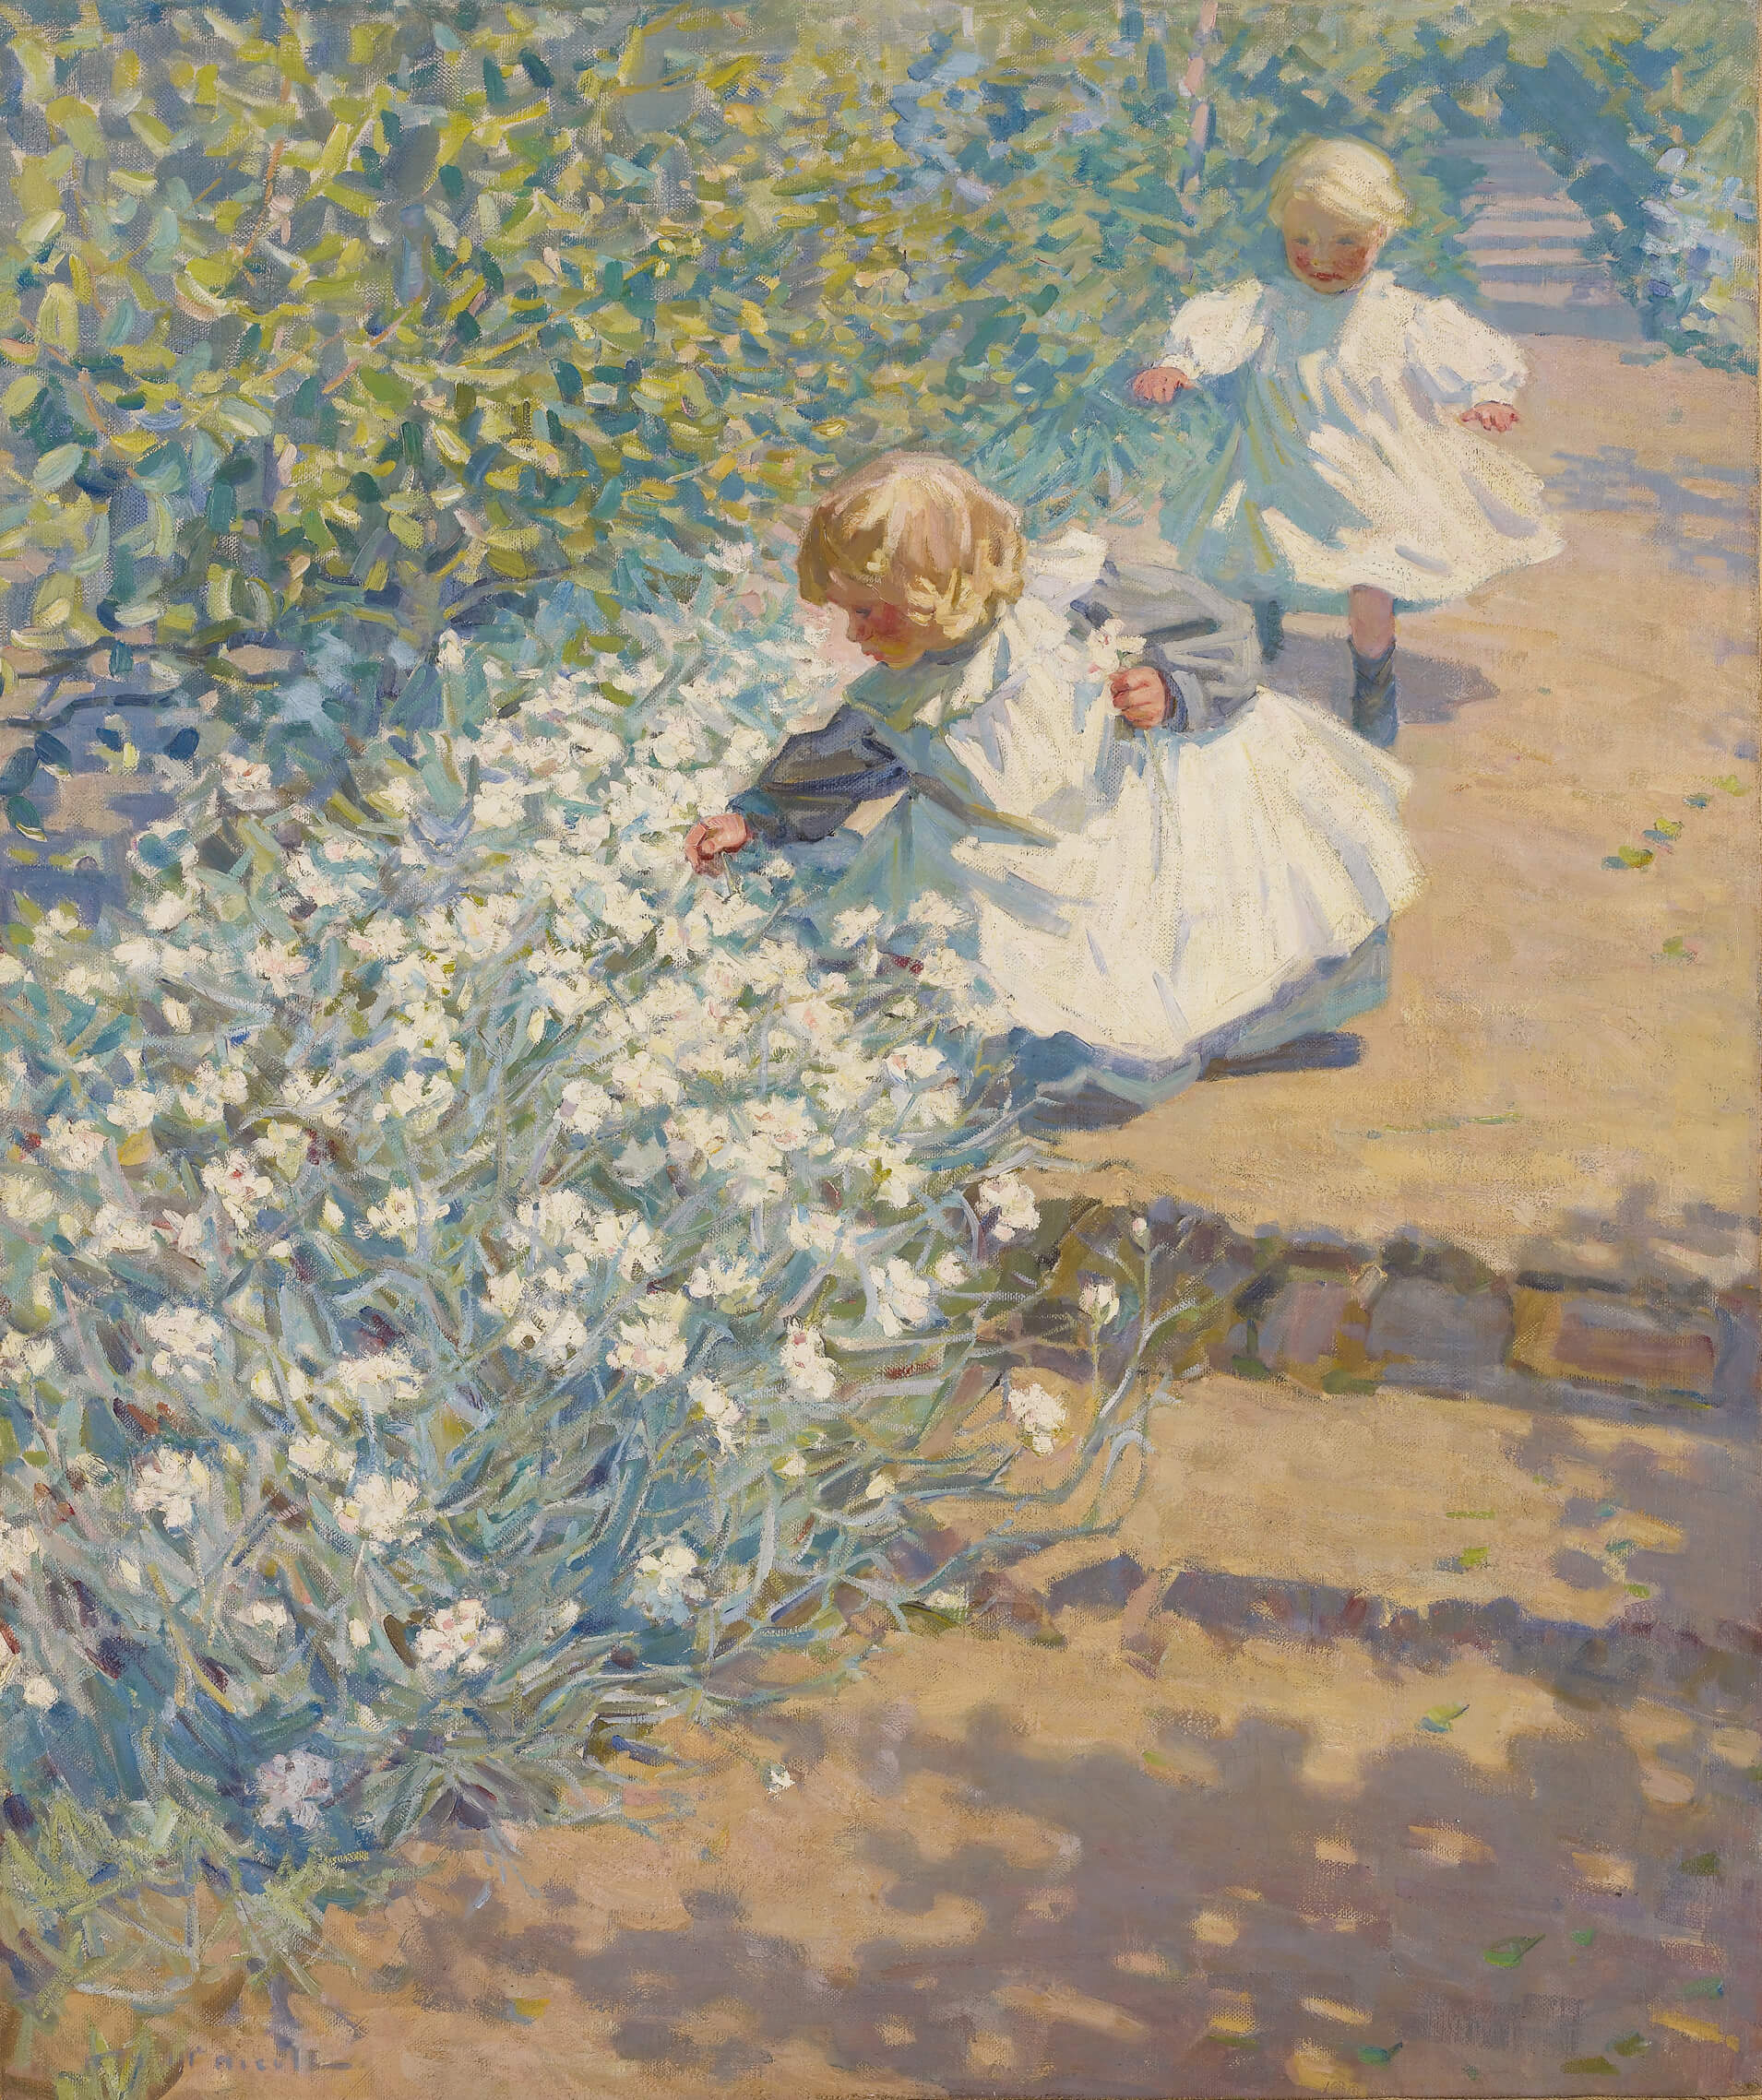 Helen McNicoll, Picking Flowers, c. 1912